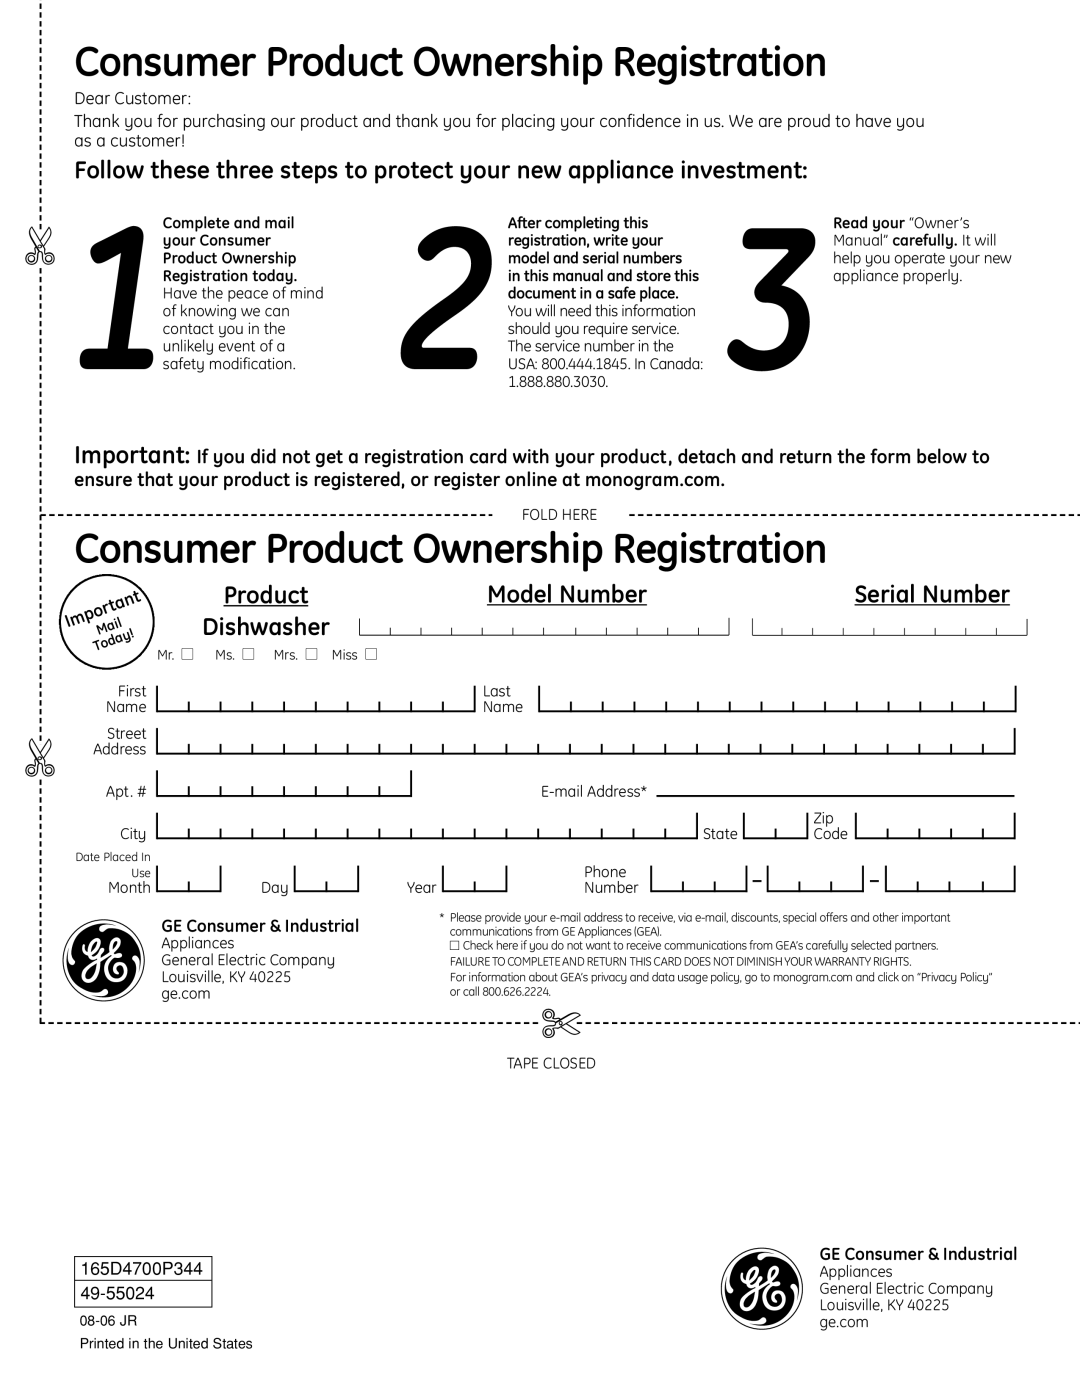 GE Monogram ZBD6800, ZBD6880, ZBD6890, ZBD0700, ZBD0710 Consumer Product Ownership Registration, Model Number, Dishwasher 